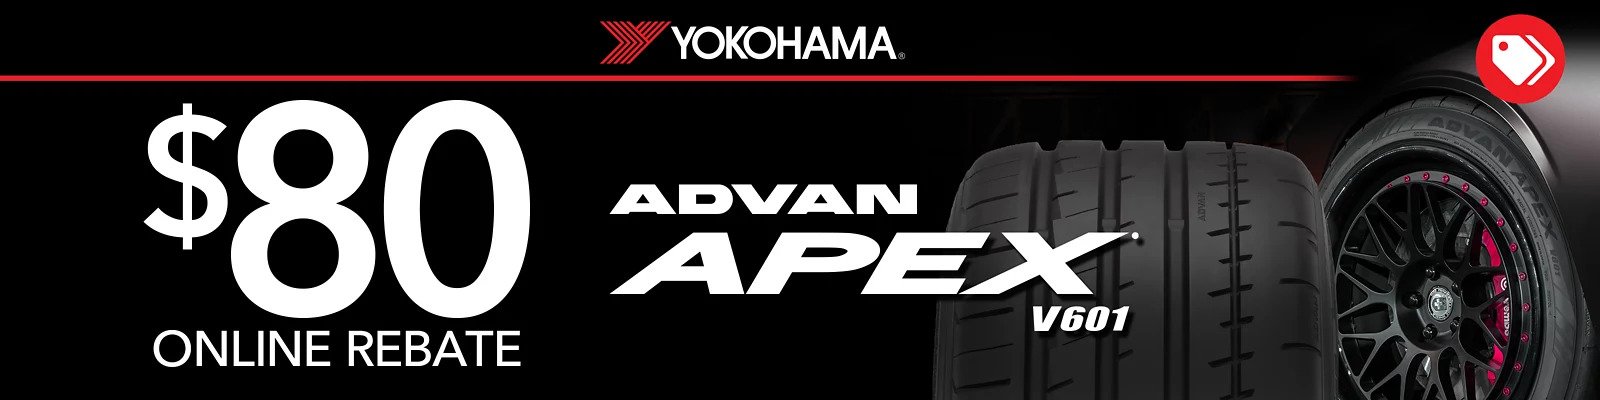 Yokohama ADVAN Apex V601 tire rebate for June 2021 with Discount Tire Direct